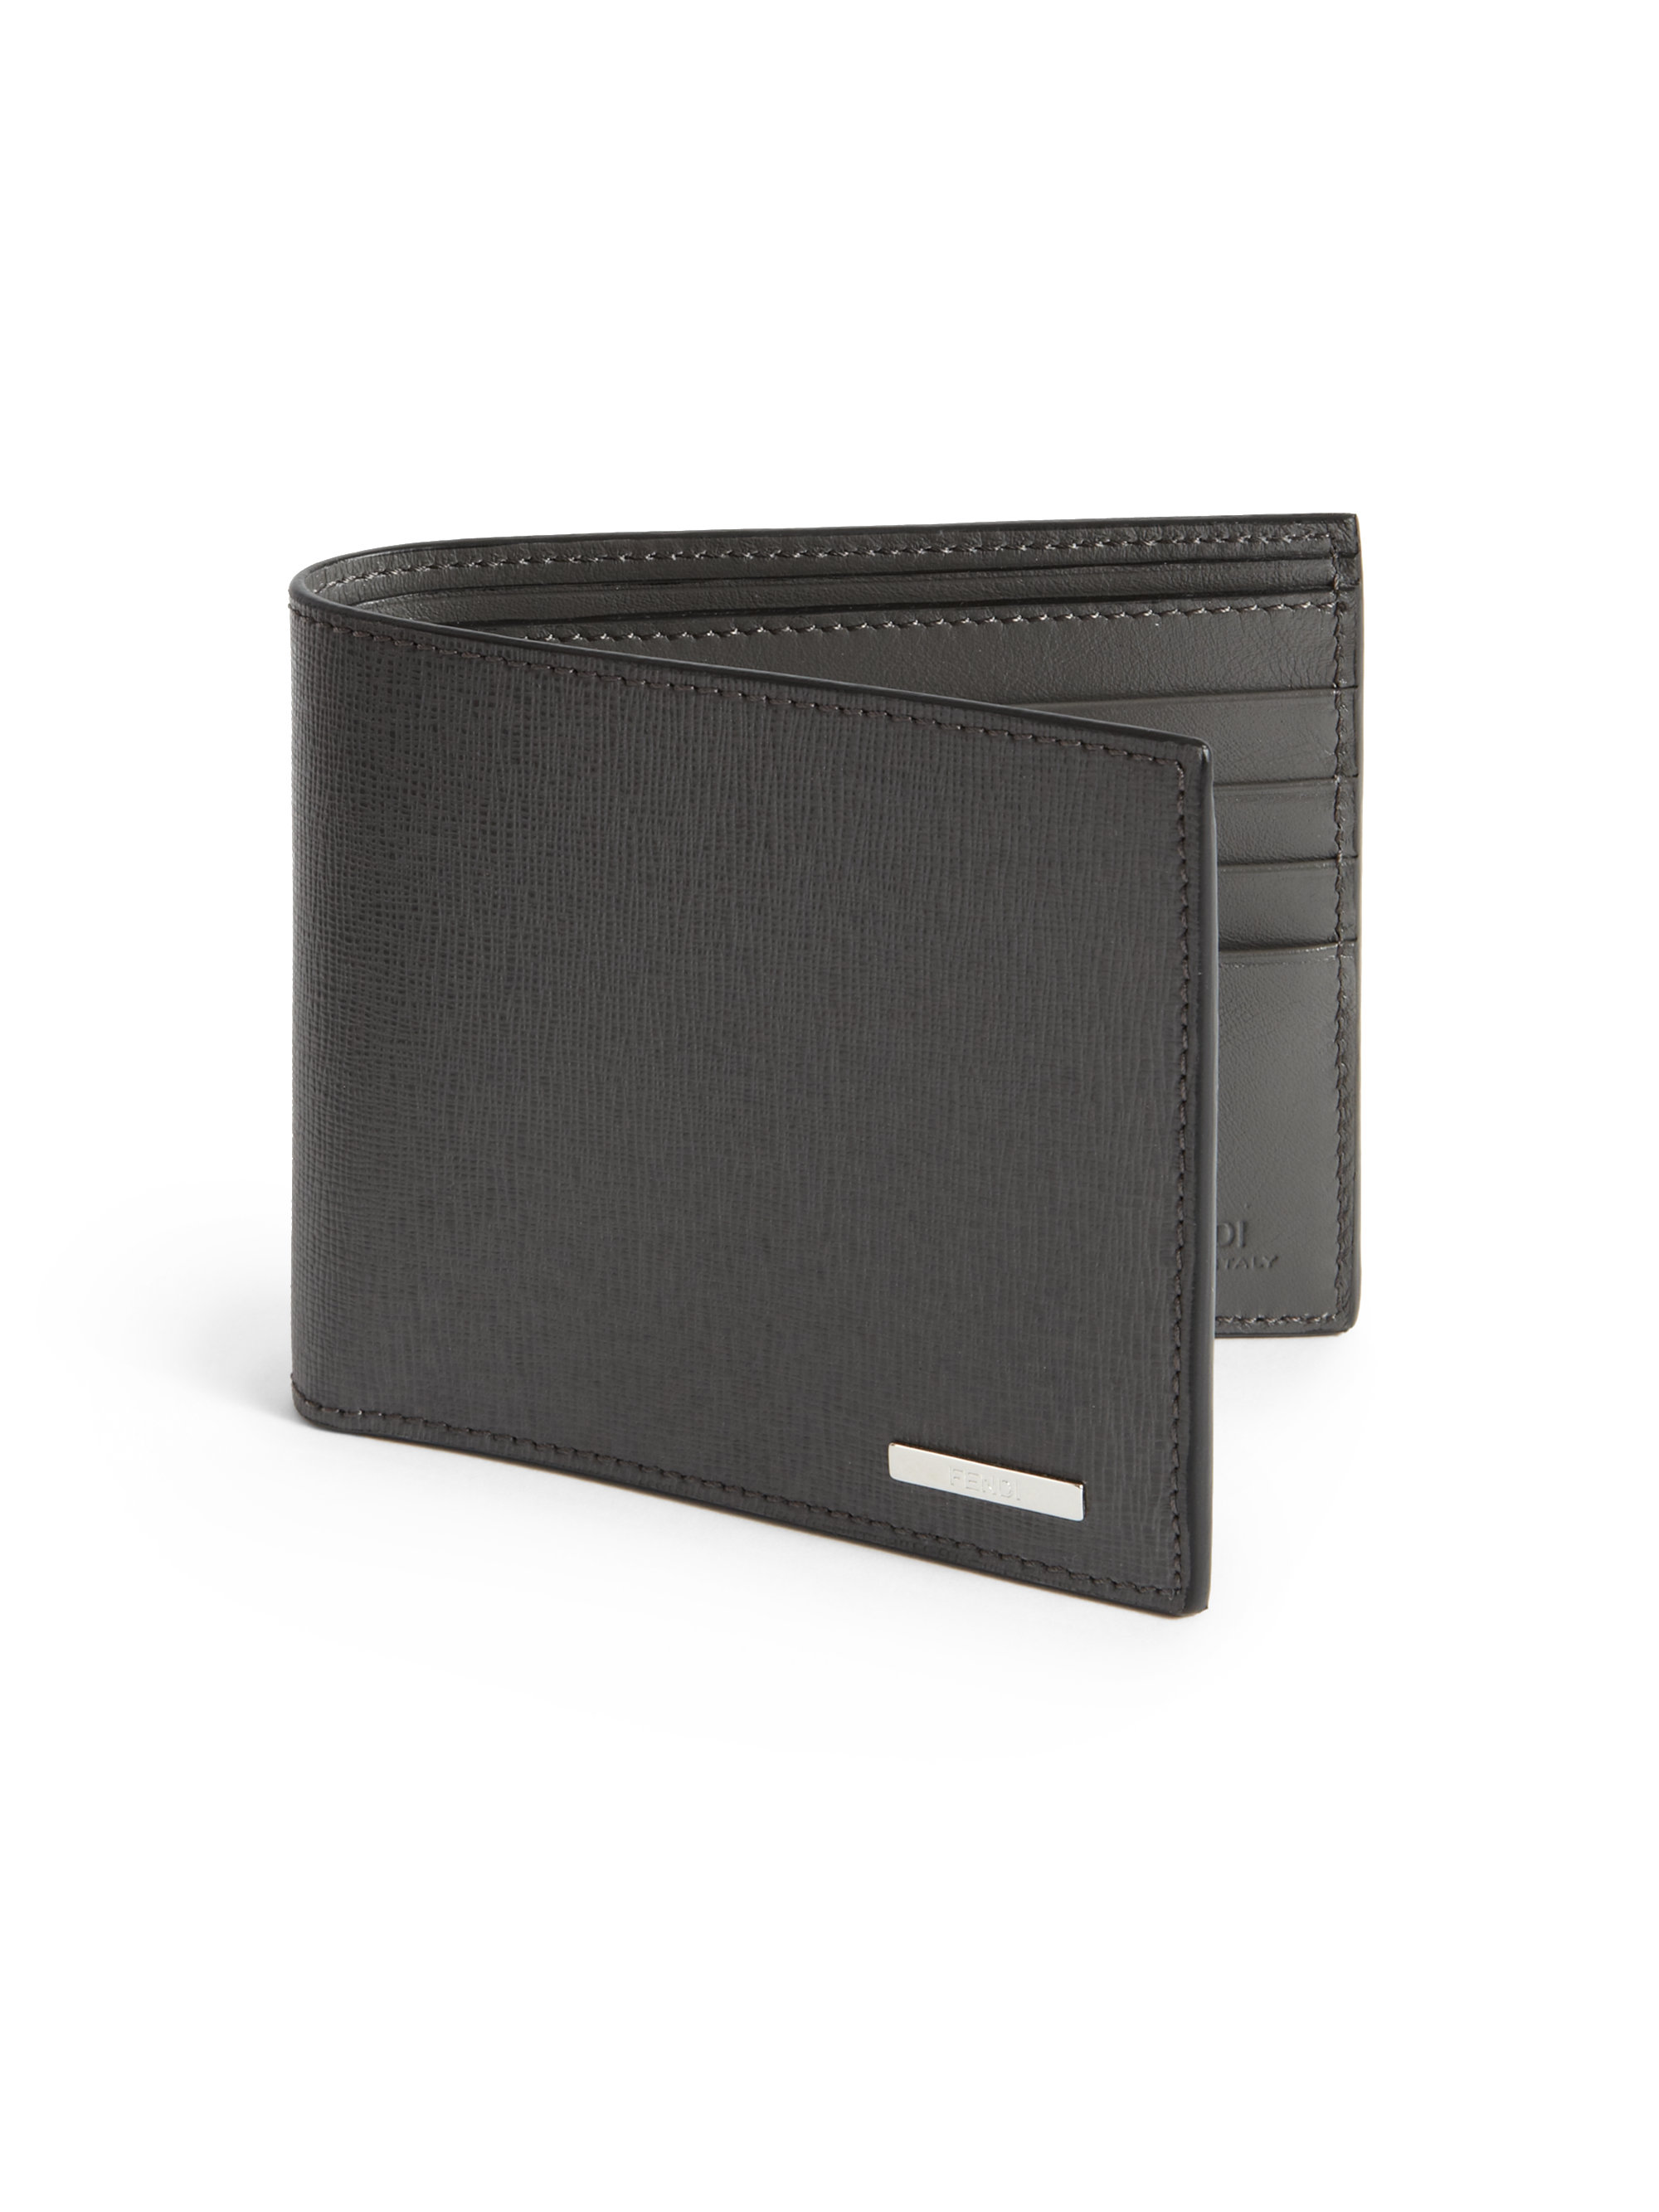 fendi-dark-grey-leather-wallet-product-1-11735218-395971258.jpeg  